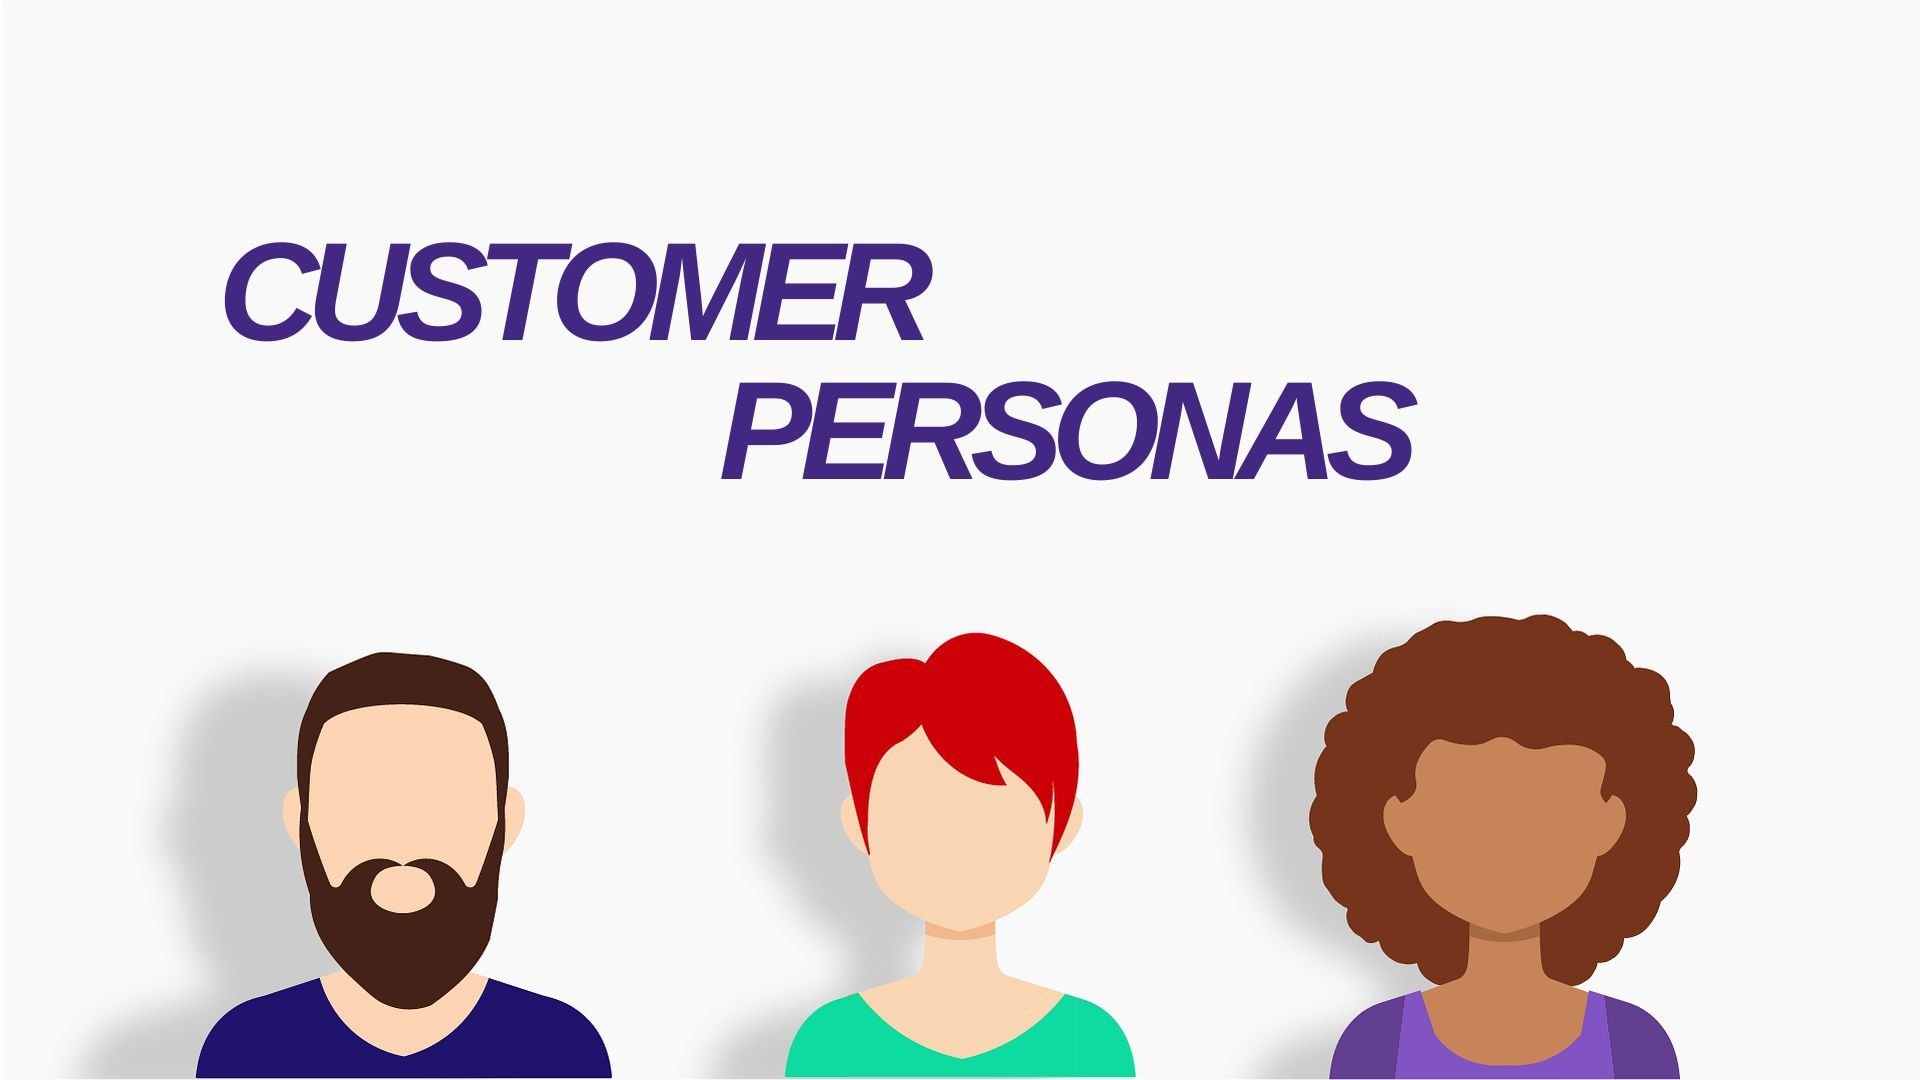 customer personas to help identify audiences